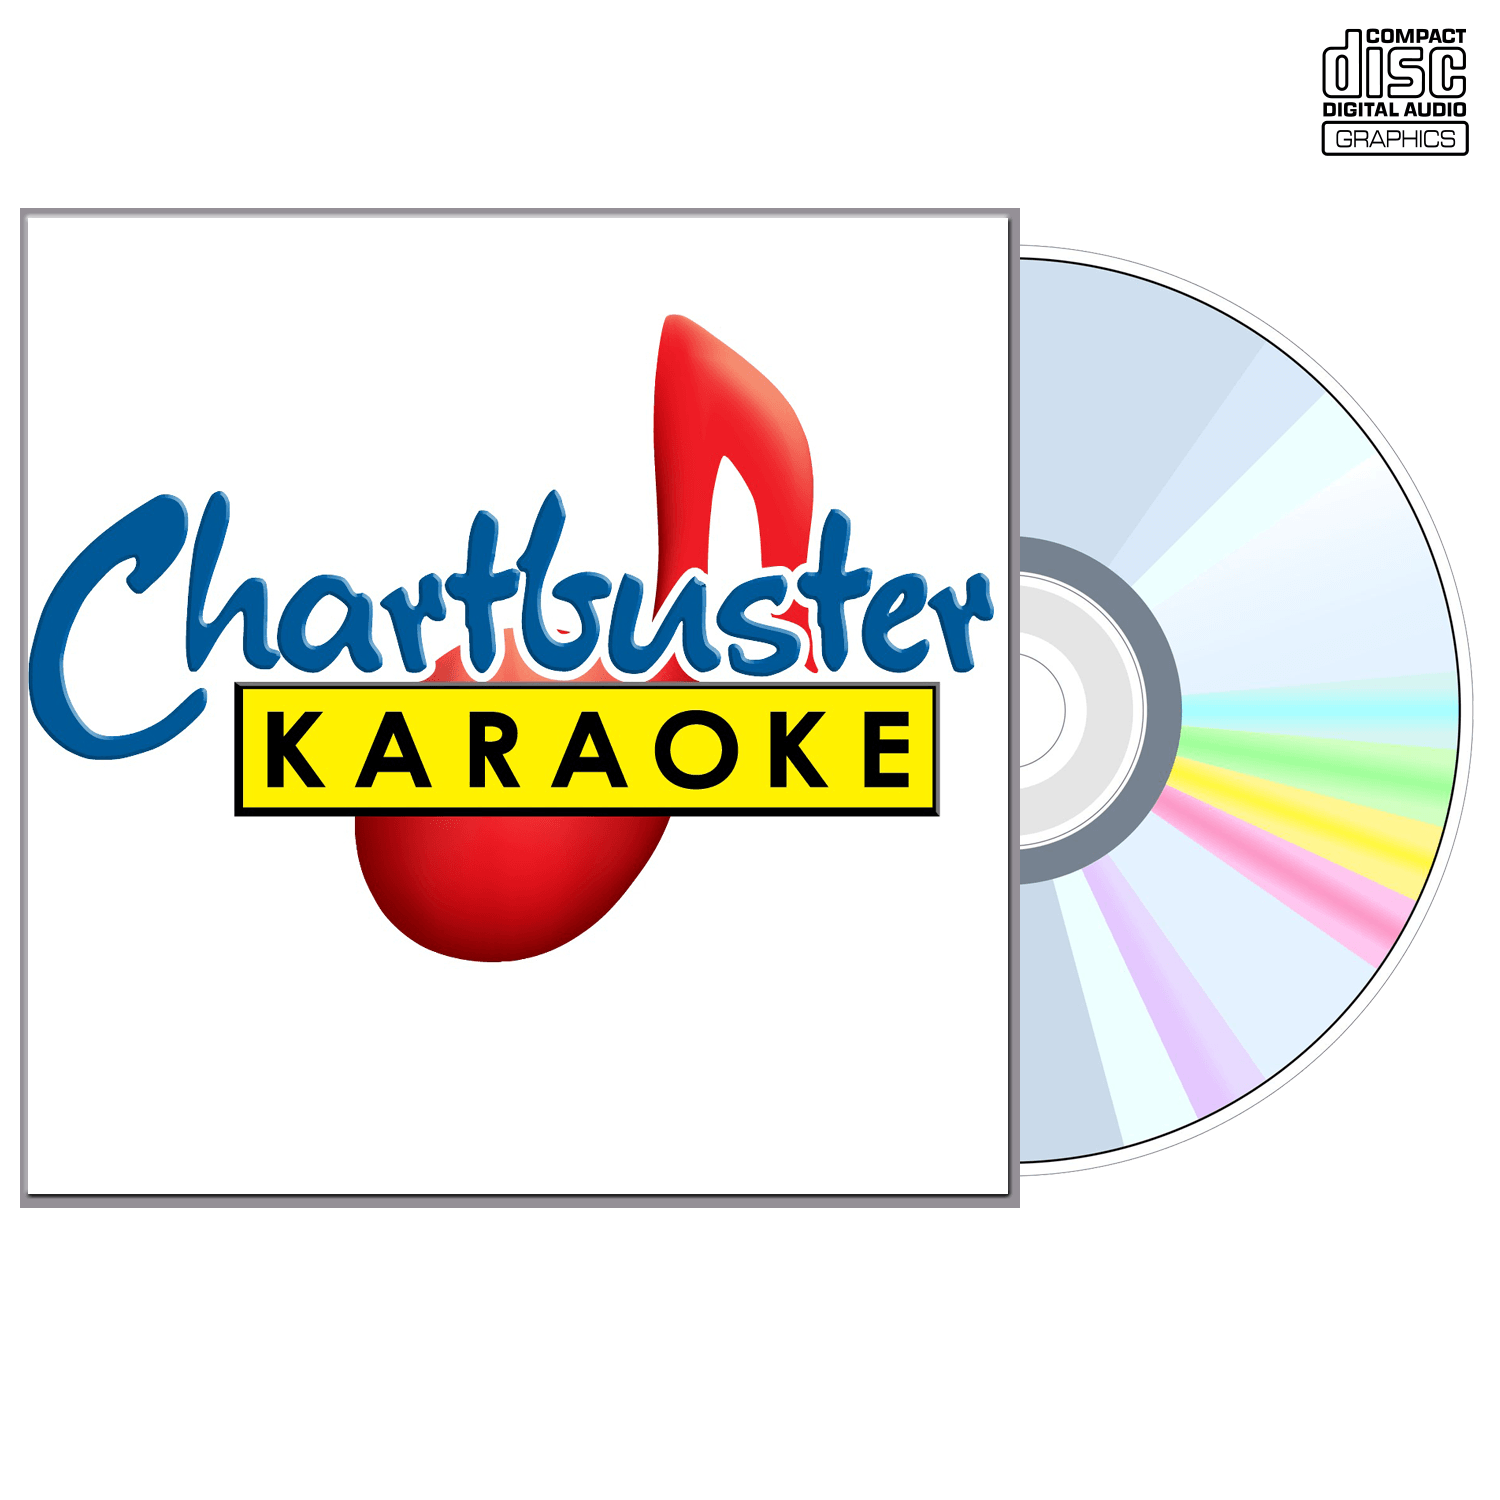 Tim Mcgraw Vol 3 - CD+G - Chartbuster Karaoke - Karaoke Home Entertainment